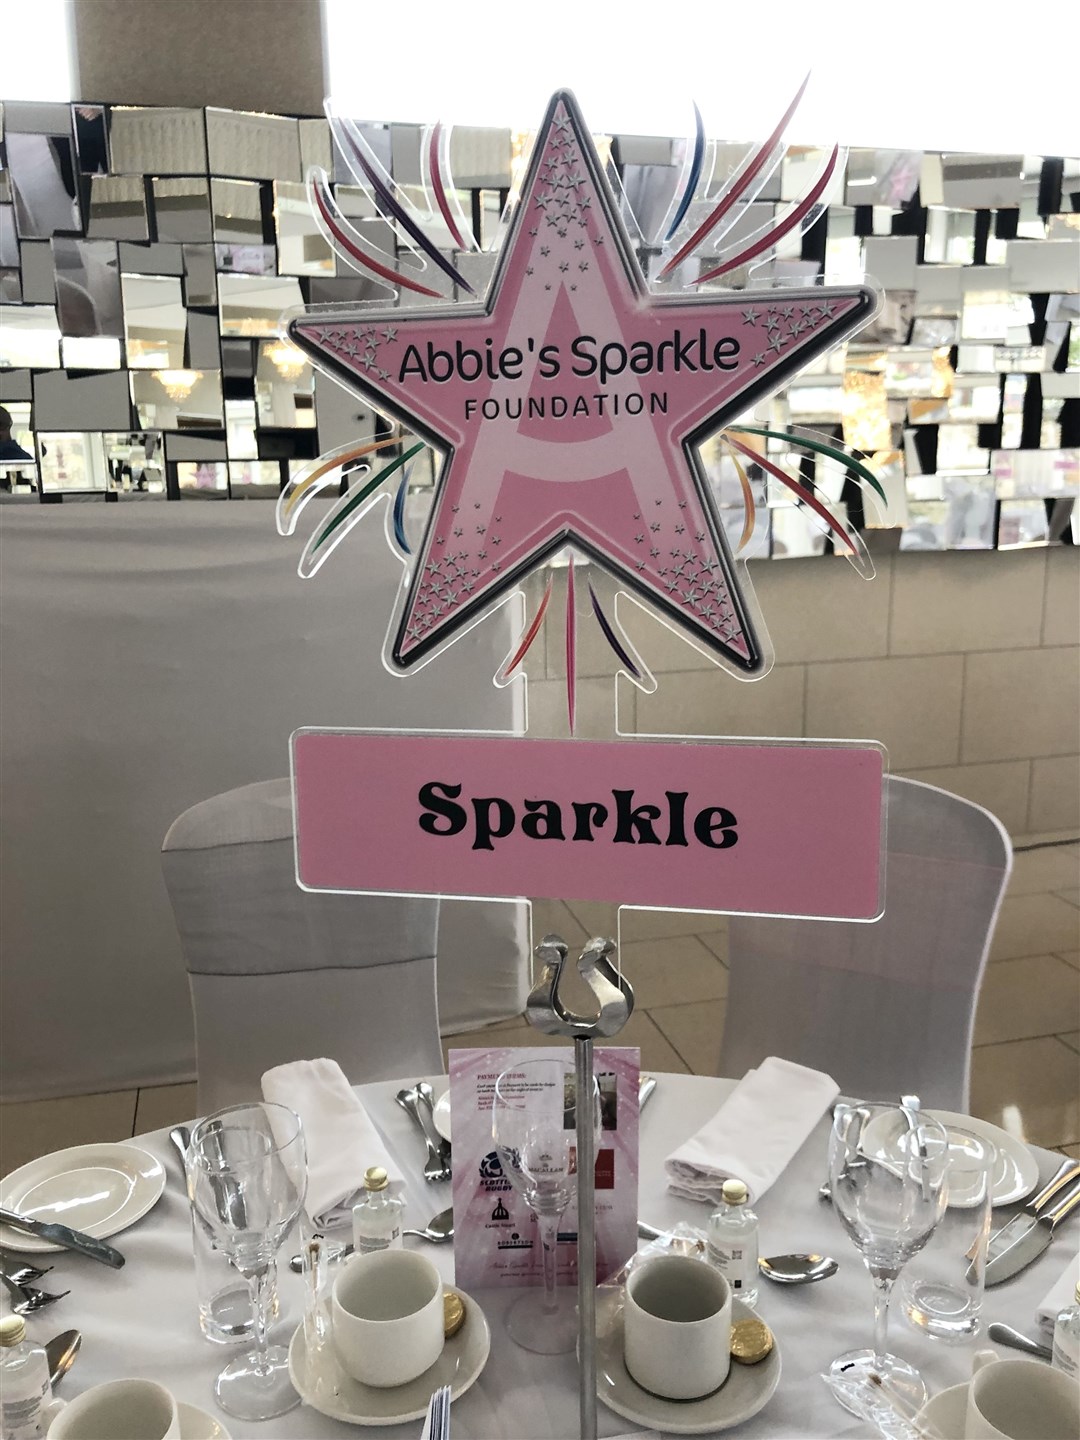 Abbie's Sparkle Foundation raised £37,000 on the night.